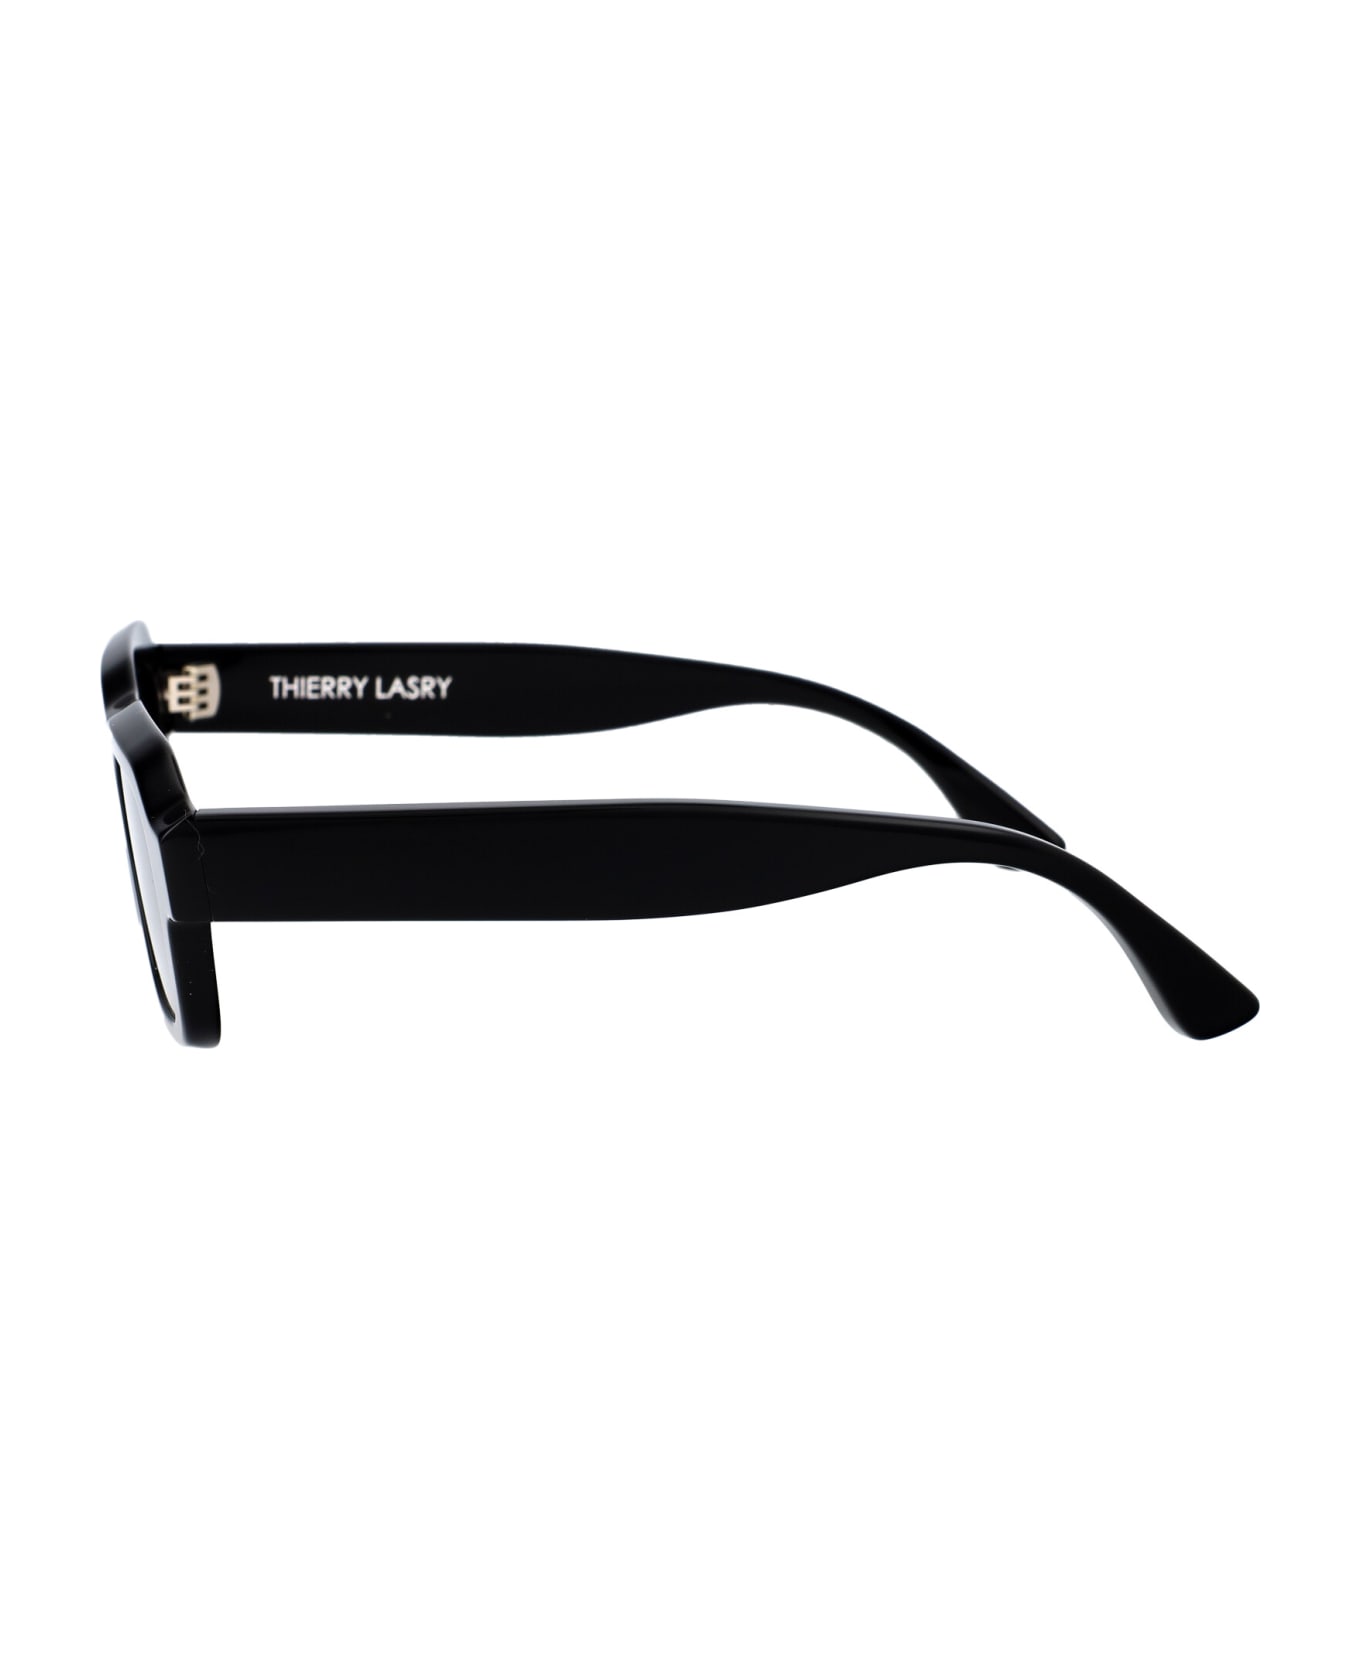 Thierry Lasry Flexxxy 101 Sunglasses - 101 BLACK